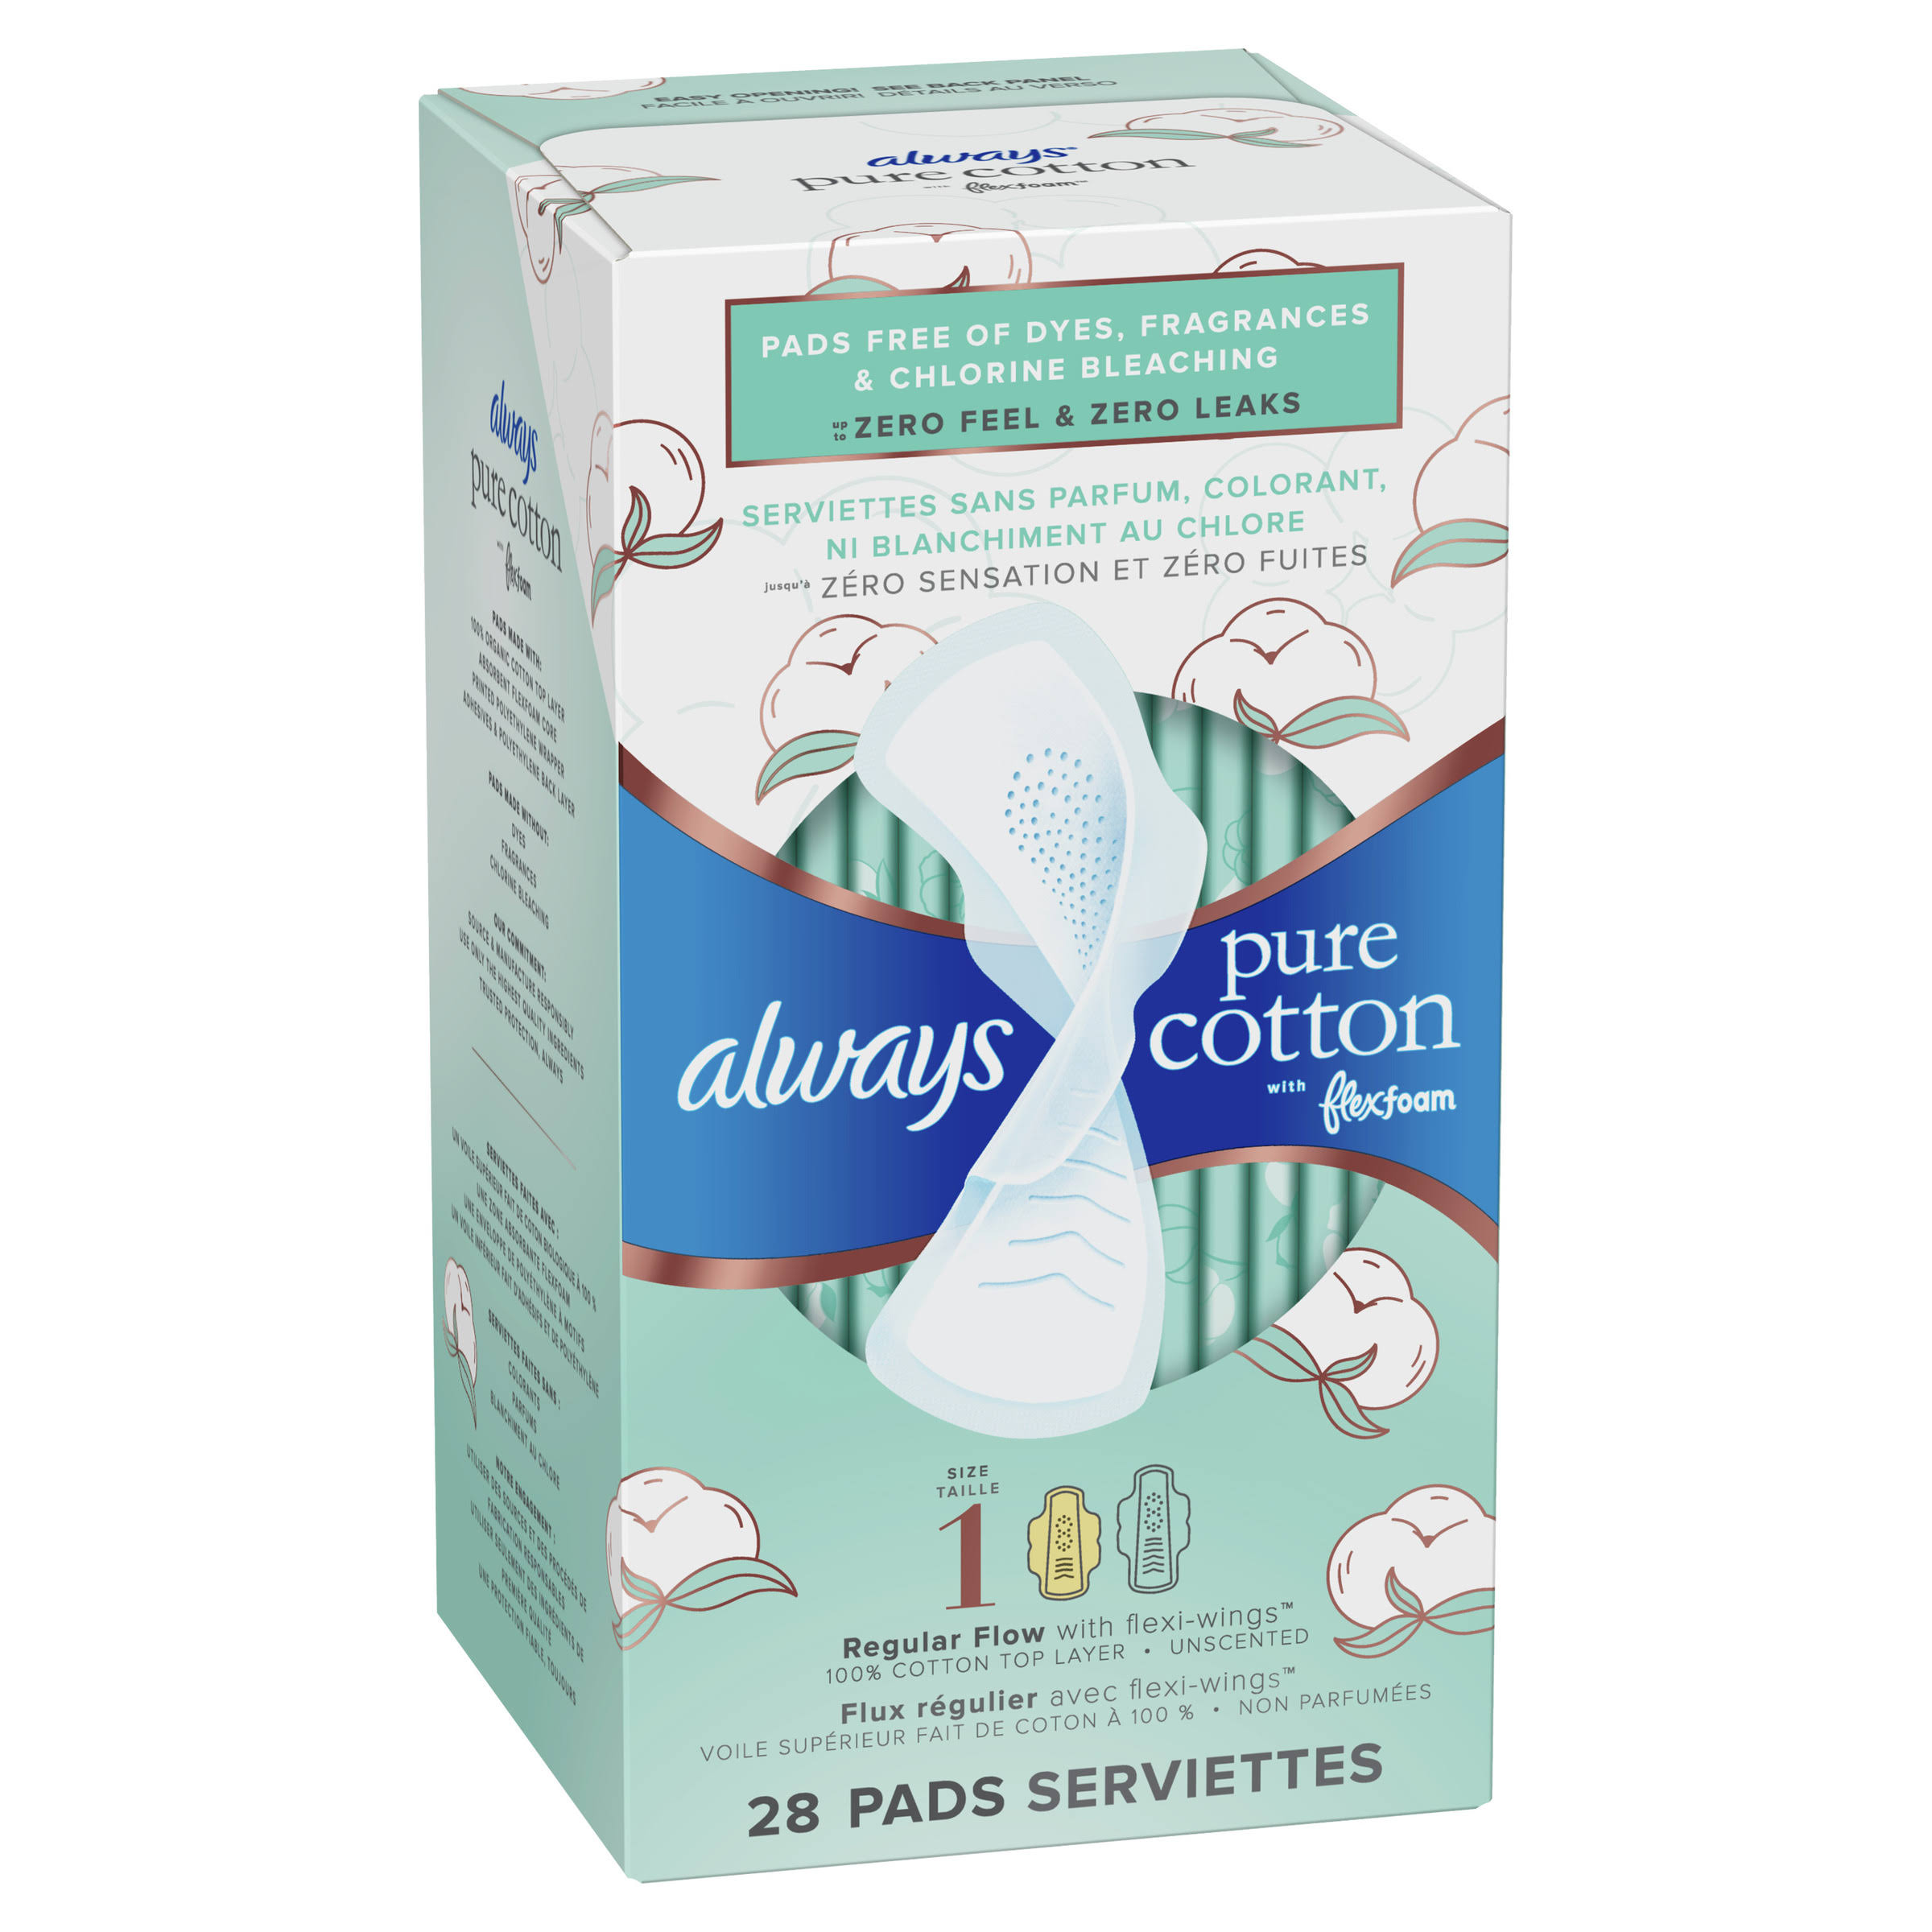 Always Pure Cotton with FlexFoam Pads Regular Absorbency